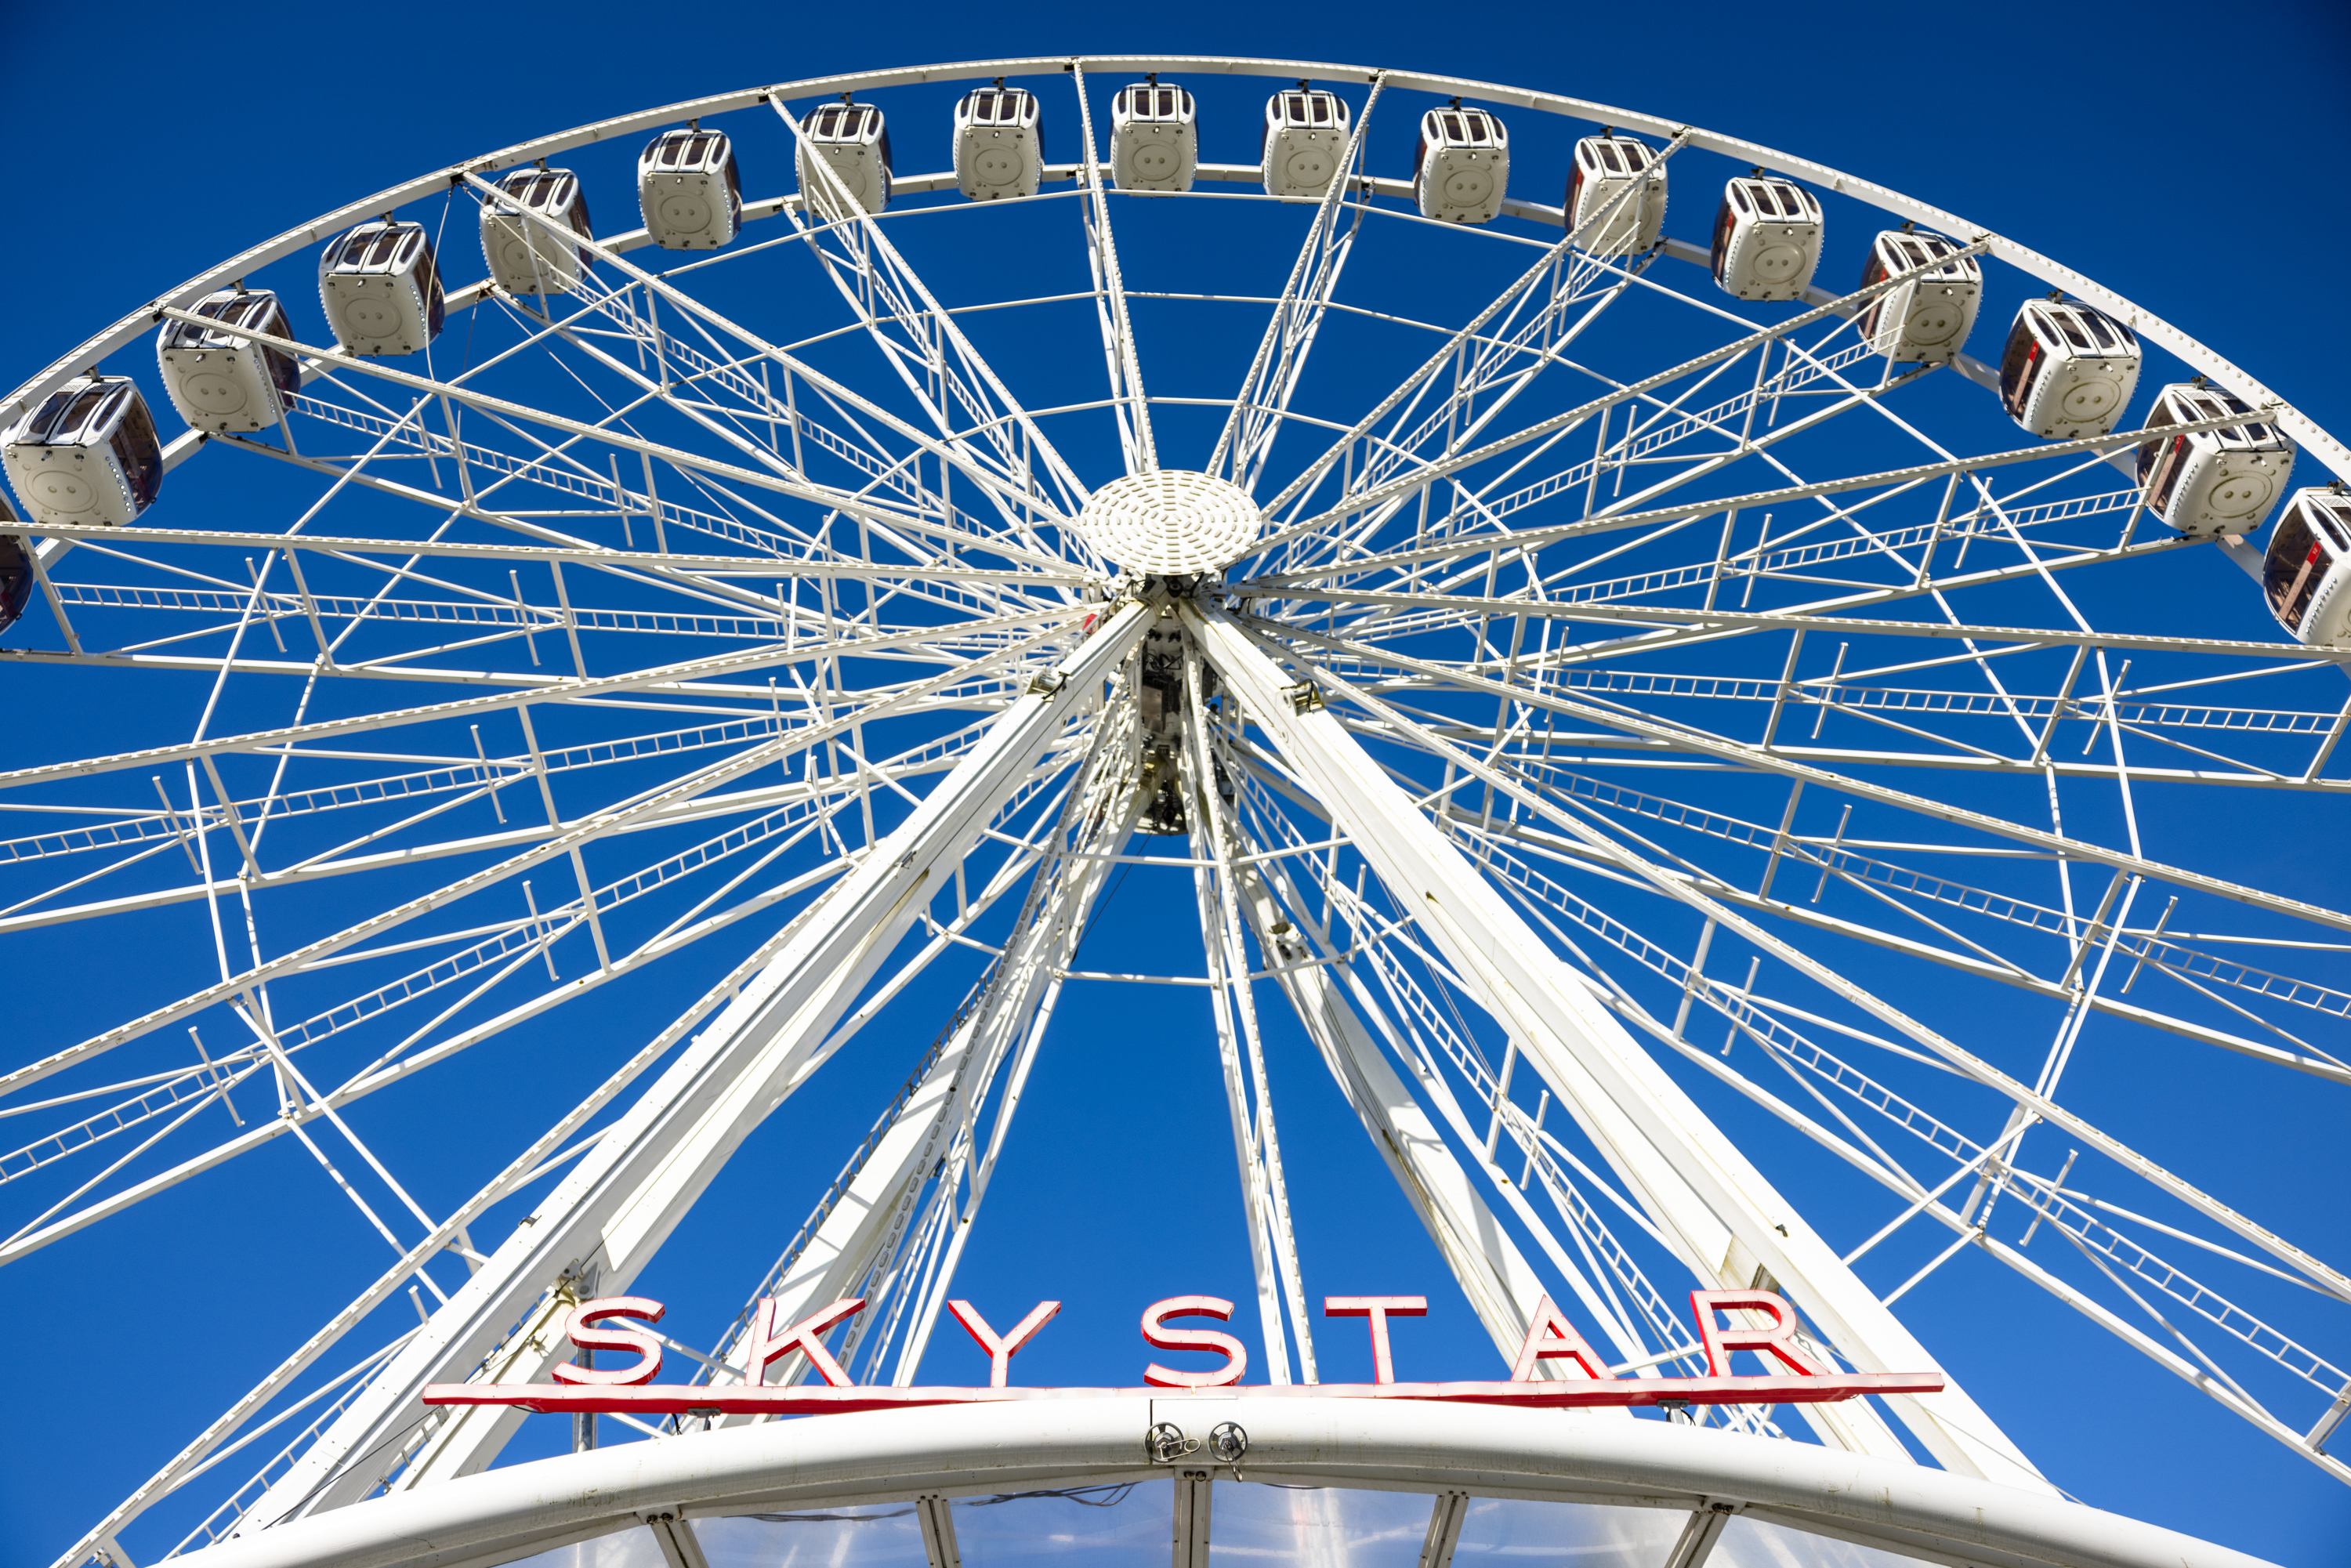 San Francisco Ferris wheel may stay at wharf until 2025